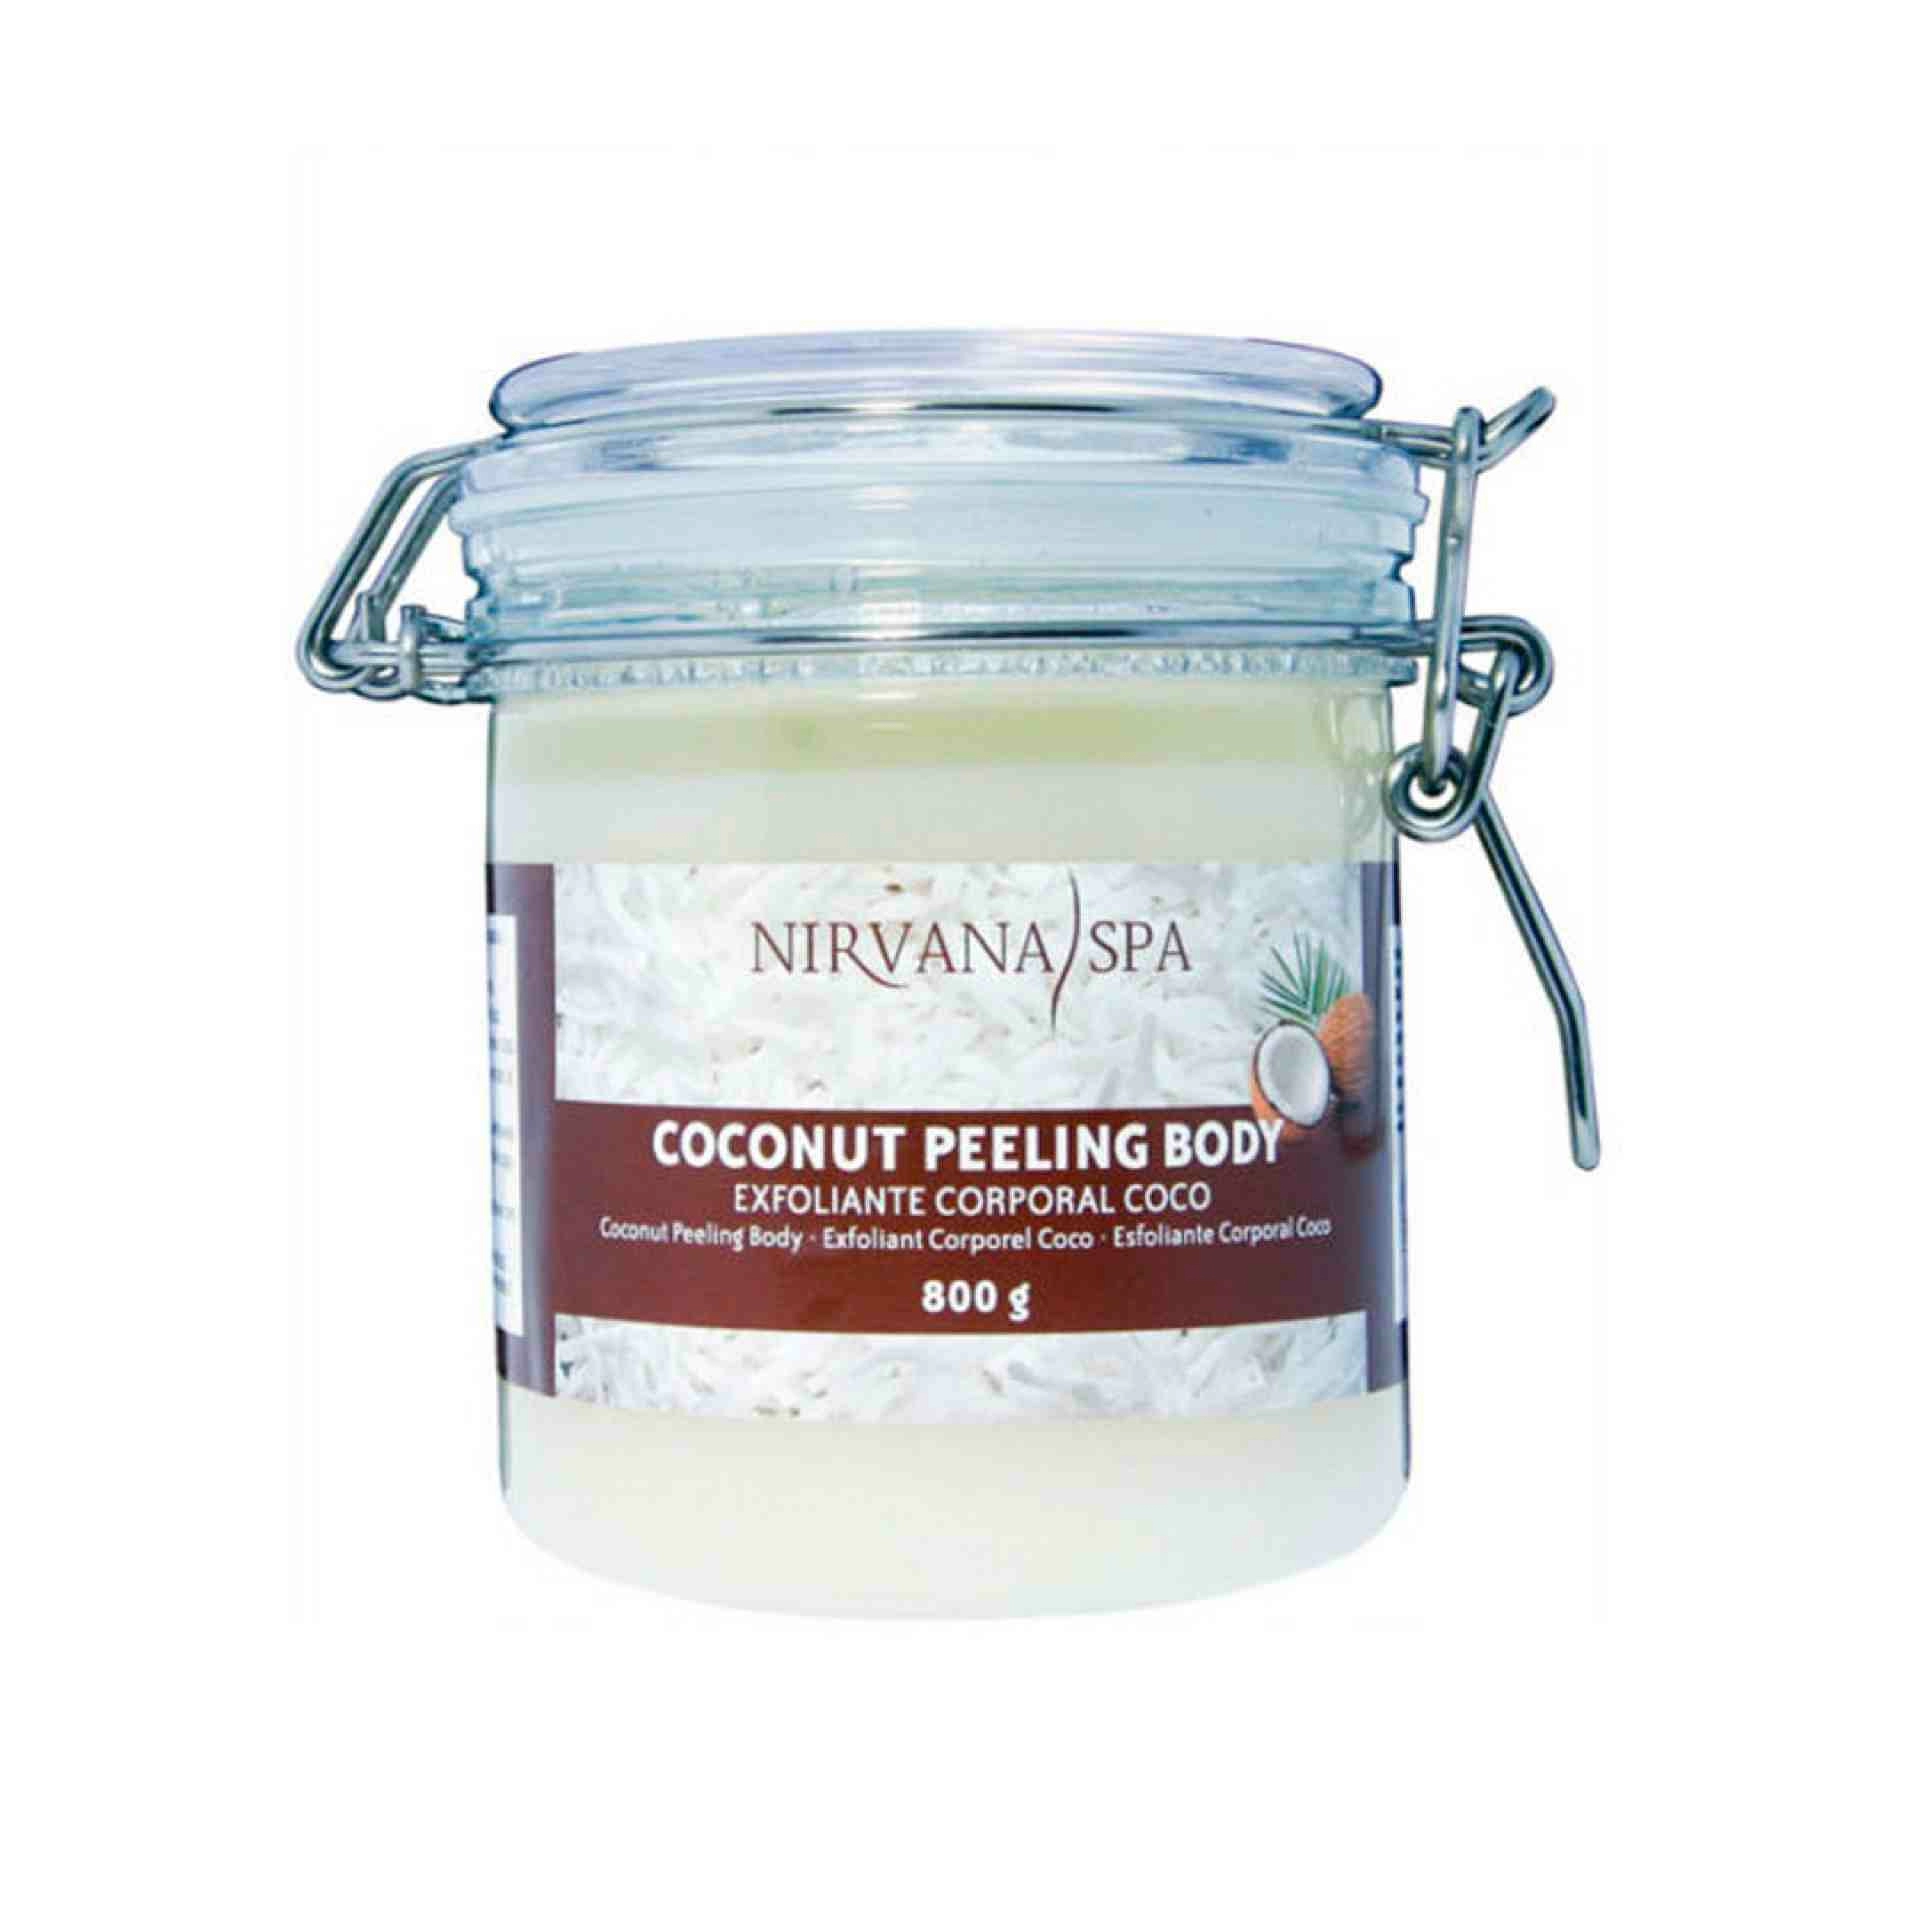 Coconut Peeling Body | Exfoliante corporal de coco 800g - Cocoterapia - Nirvana Spa ®